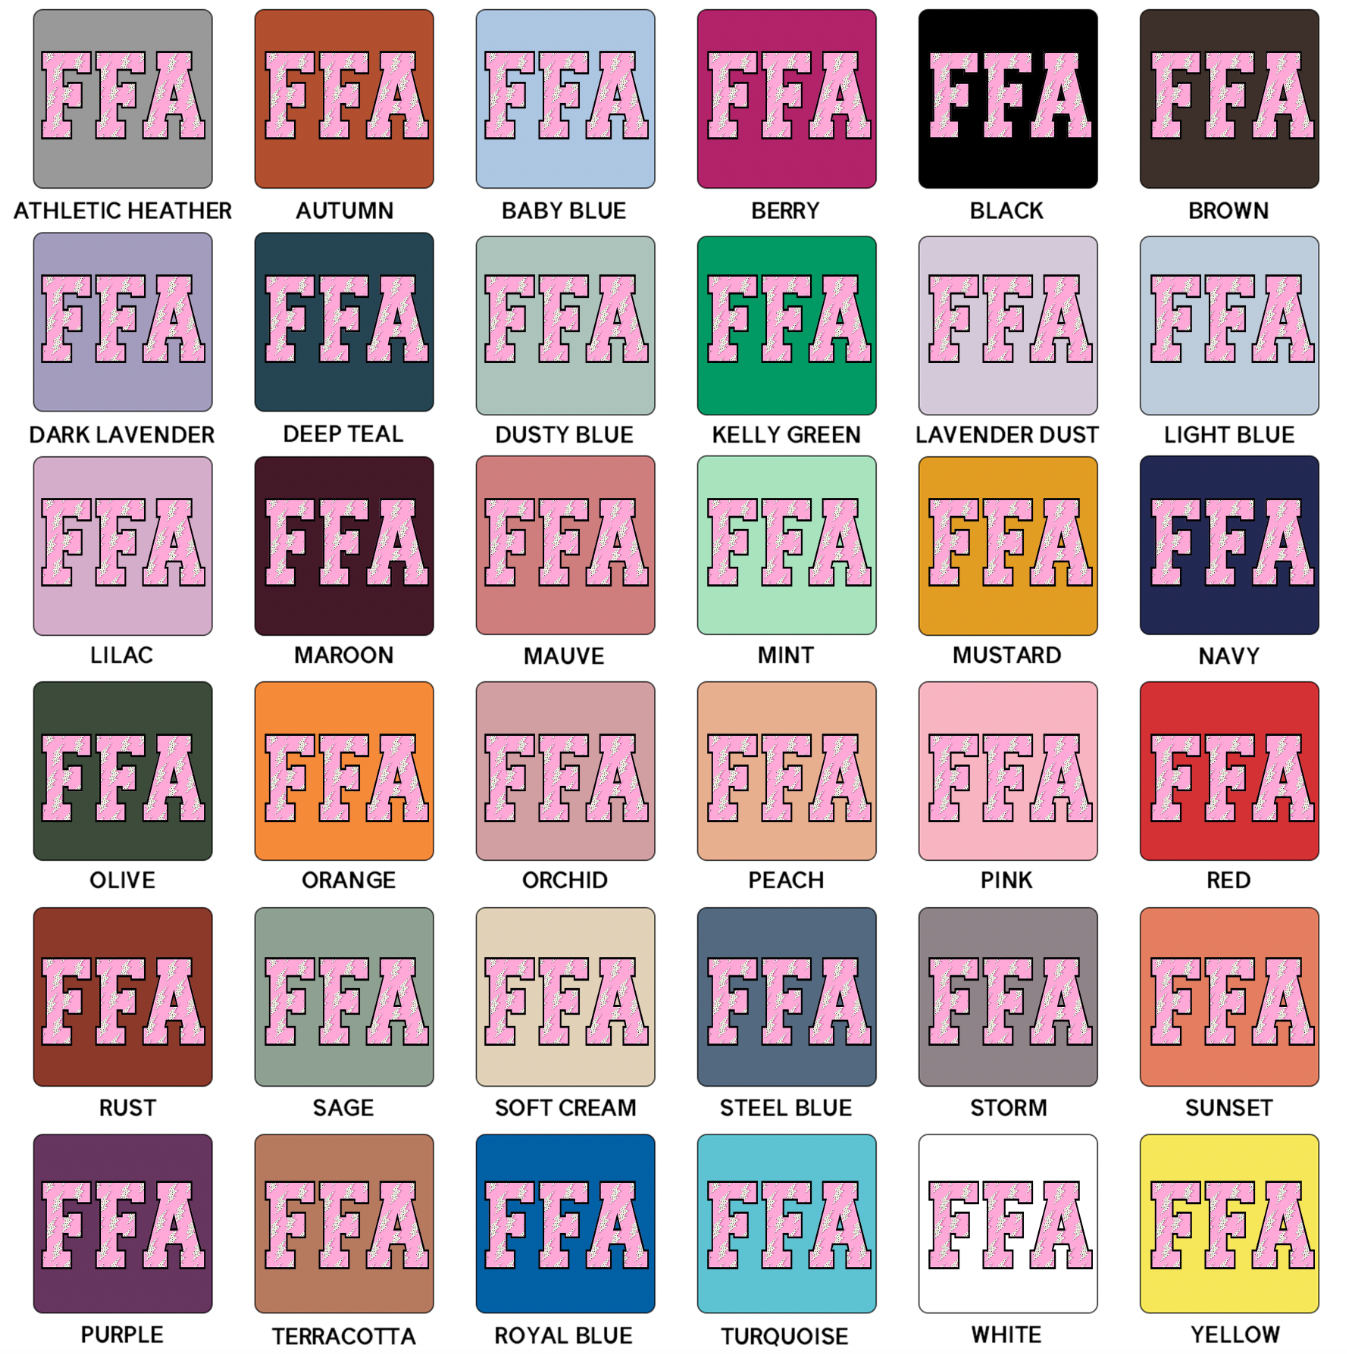 FFA Pink Lightning Bolt T-Shirt (XS-4XL) - Multiple Colors!